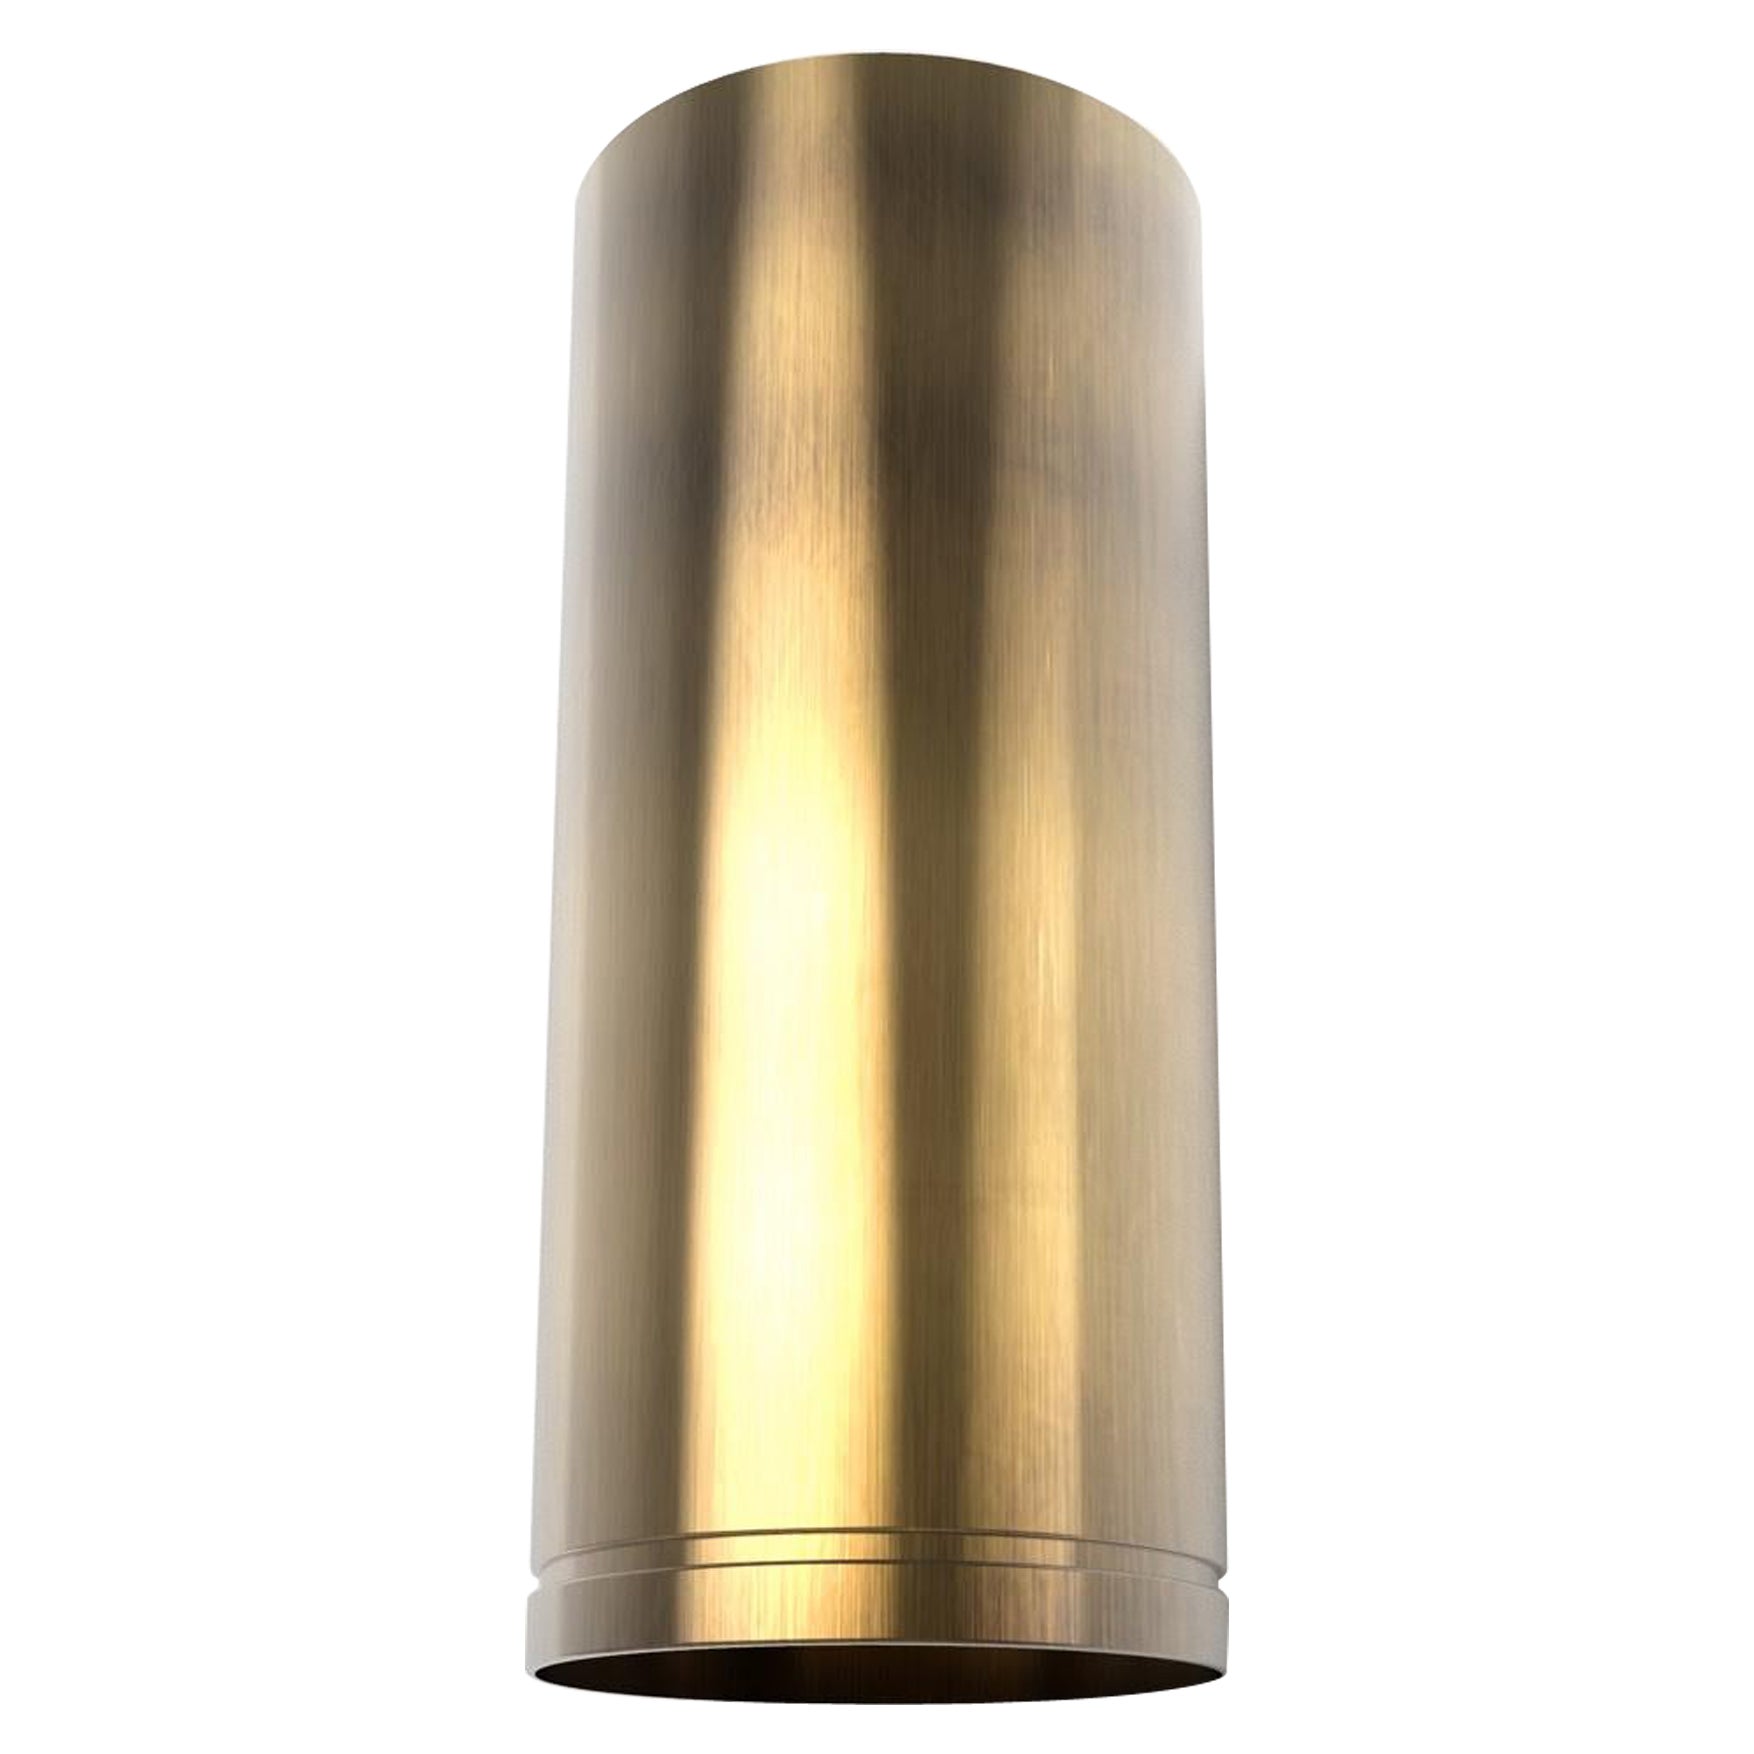 Zylinder Range Hood aus Messing – OLIVIA 2.0 – Sonderanfertigung